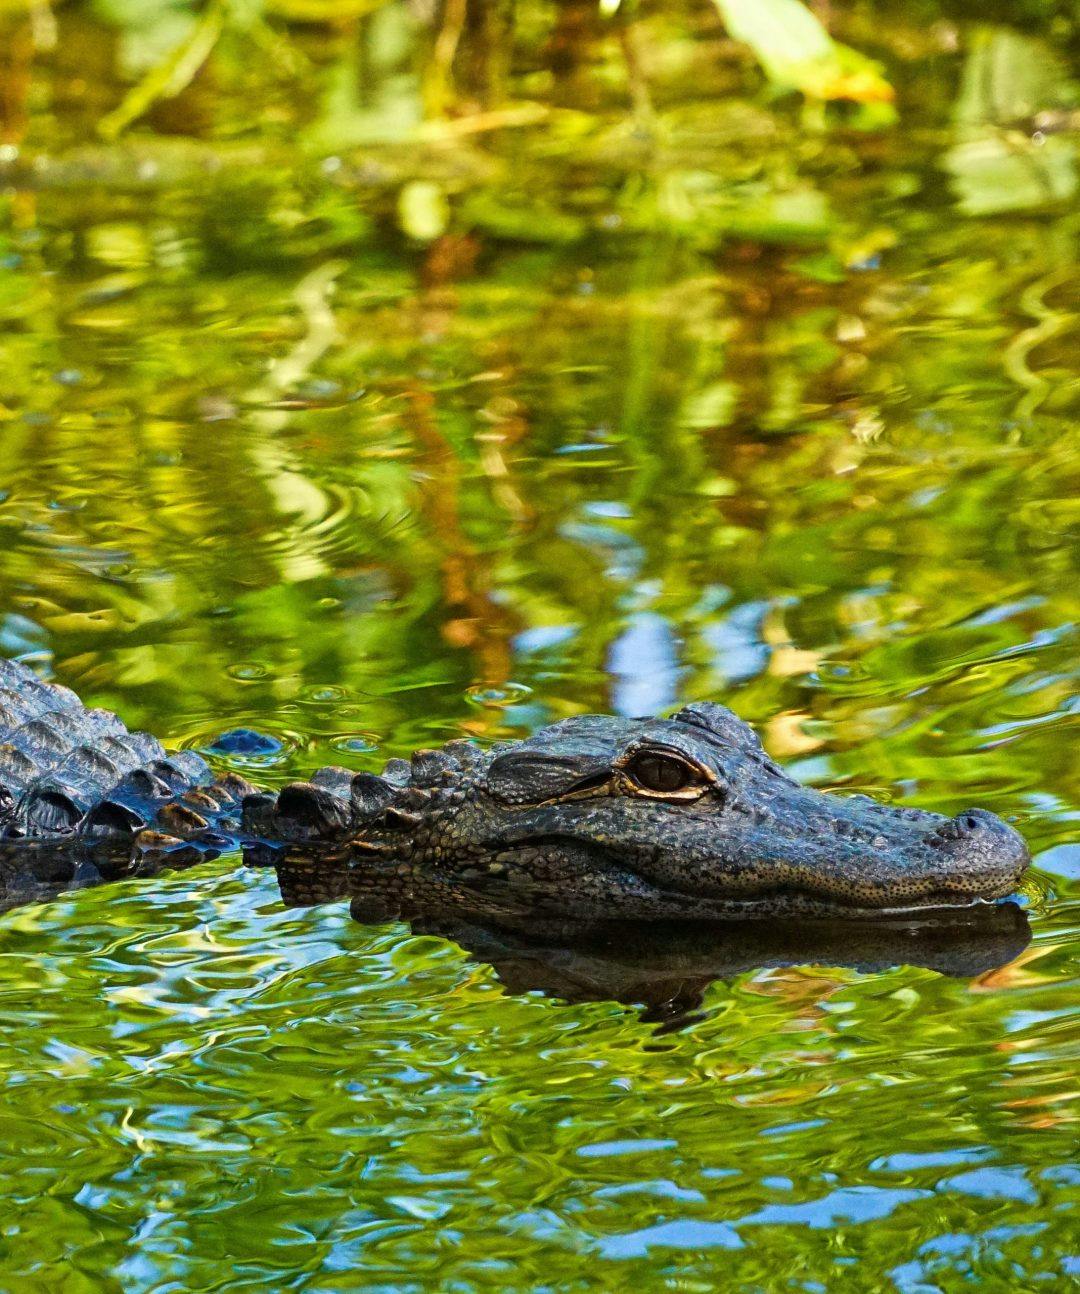 A Florida gator